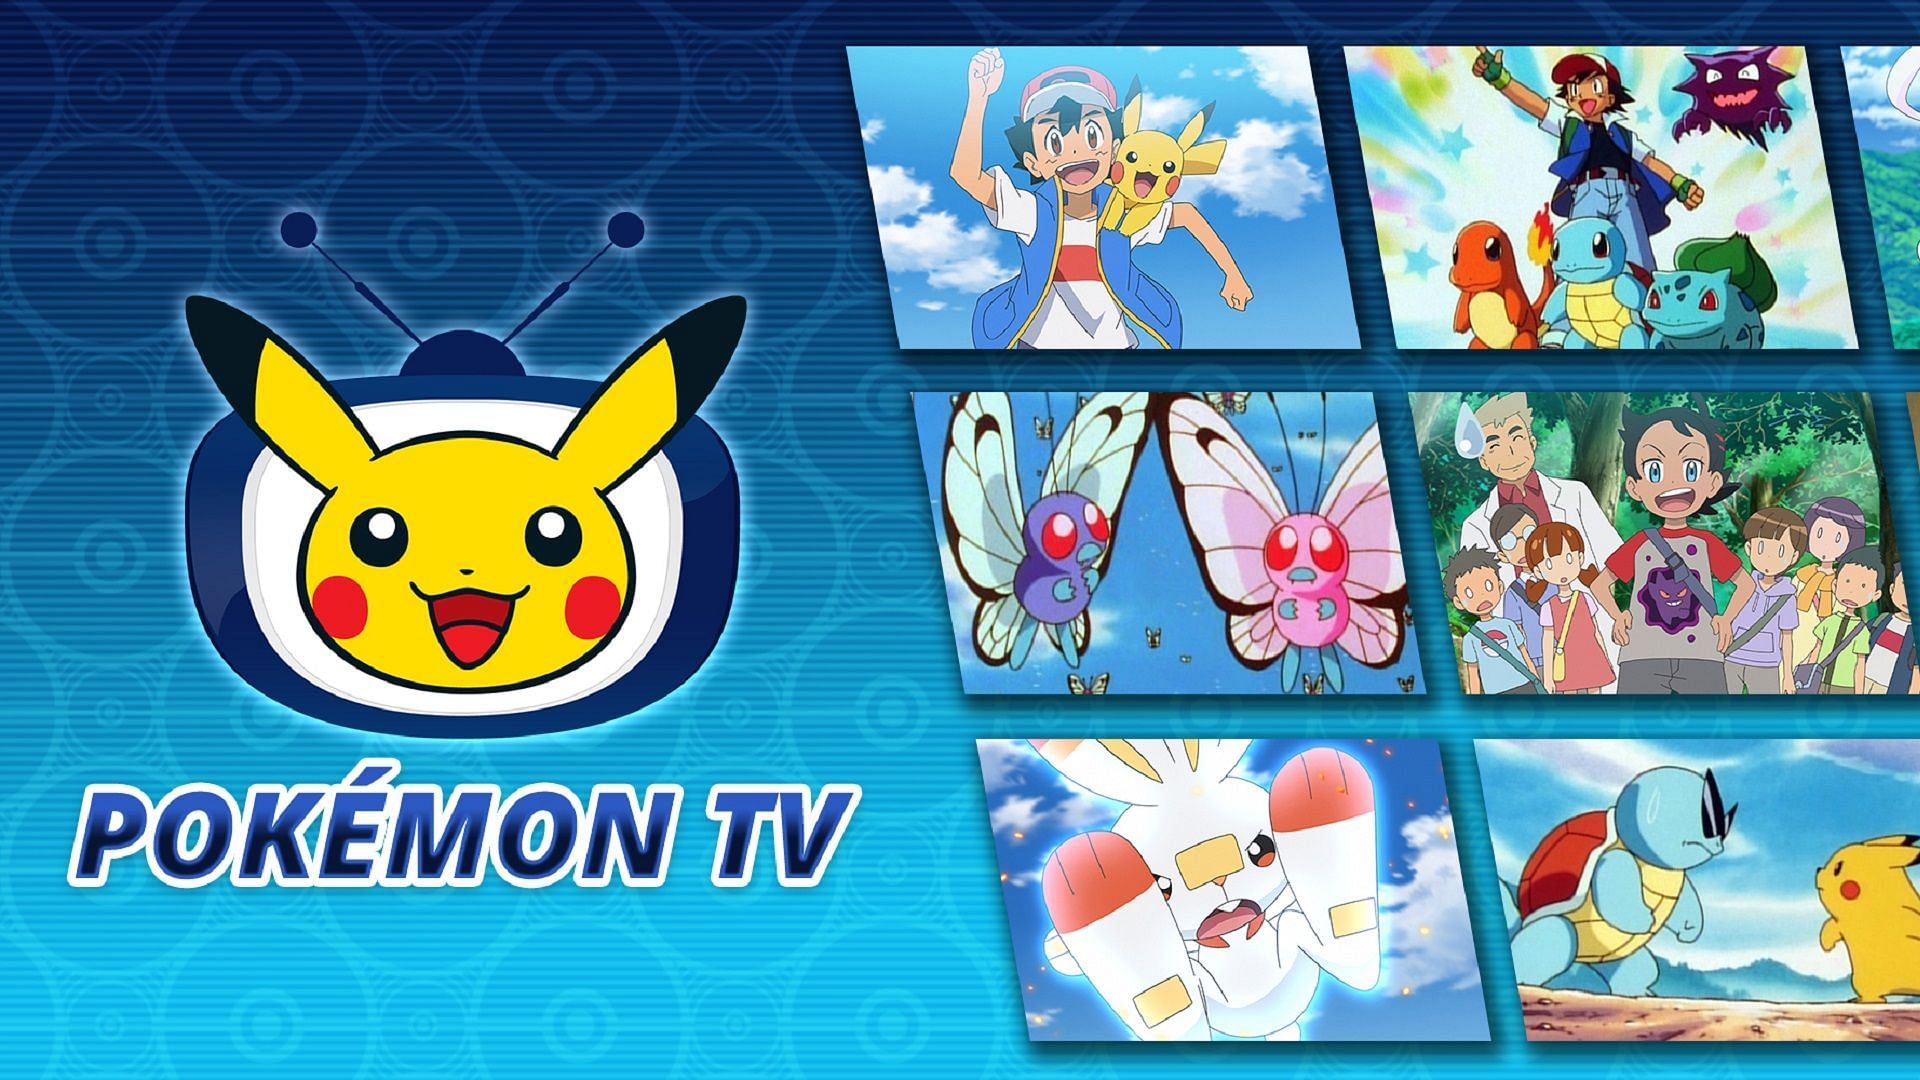 Pokemon TV began with its streaming site in November 2010 (Image via The Pokemon Company)